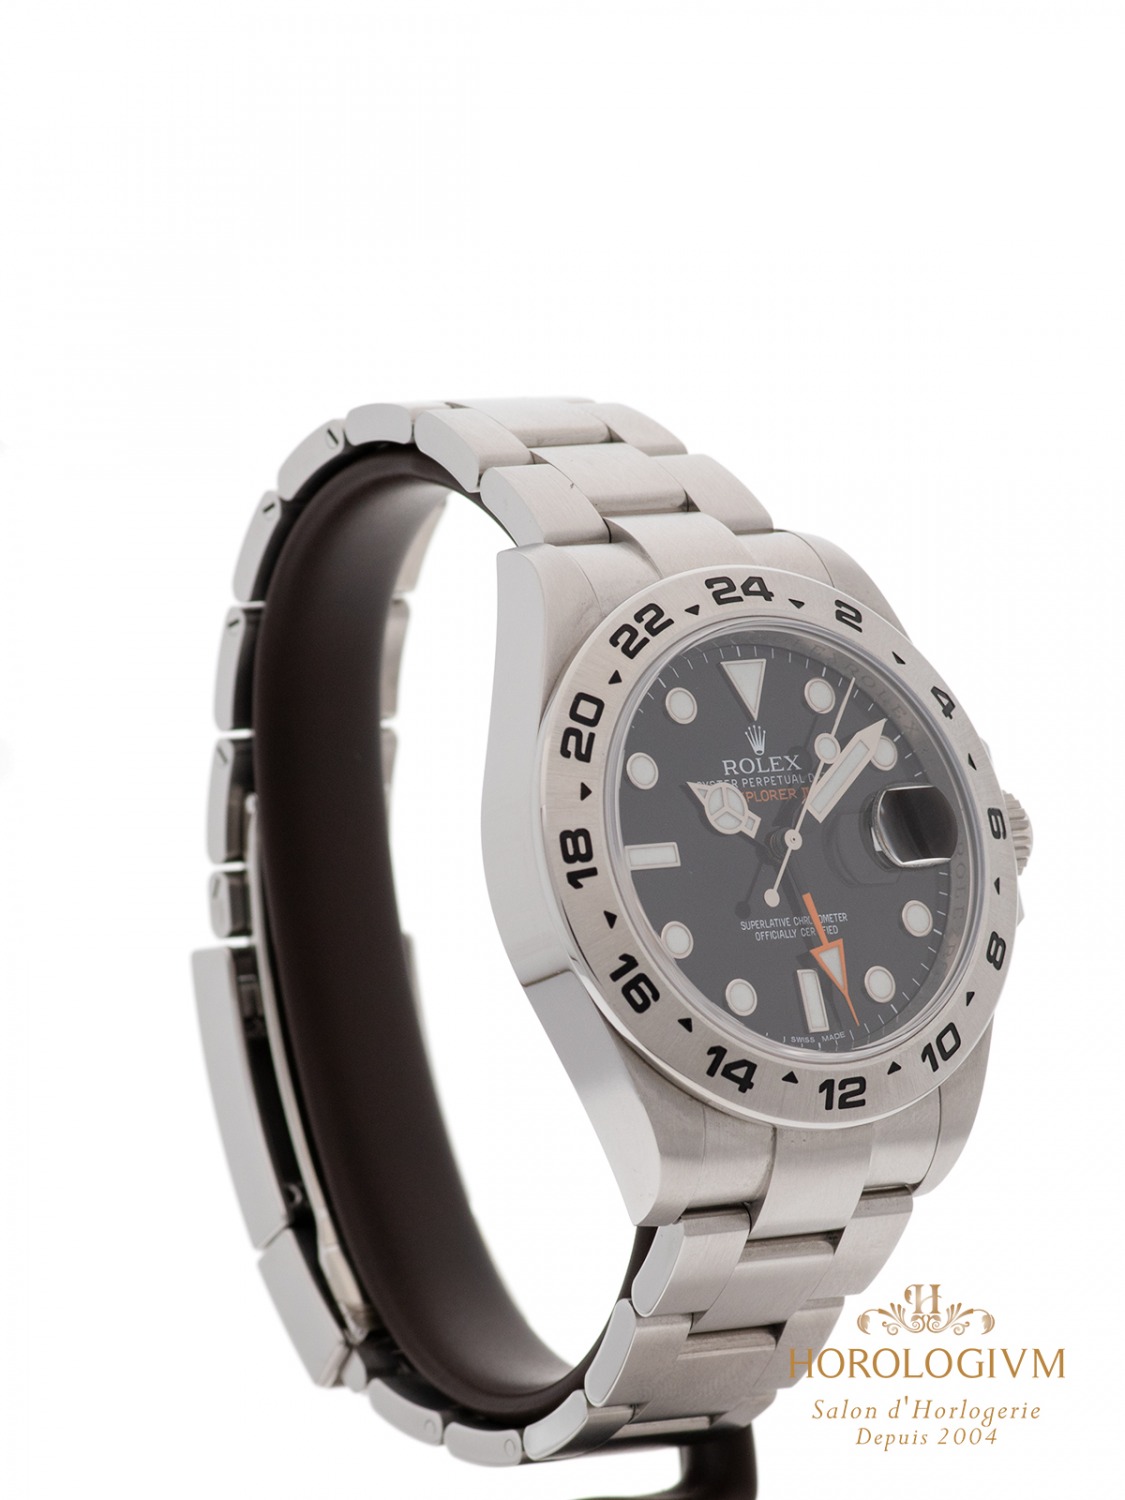 Rolex Explorer II 42 MM REF. 216570 watch, silver